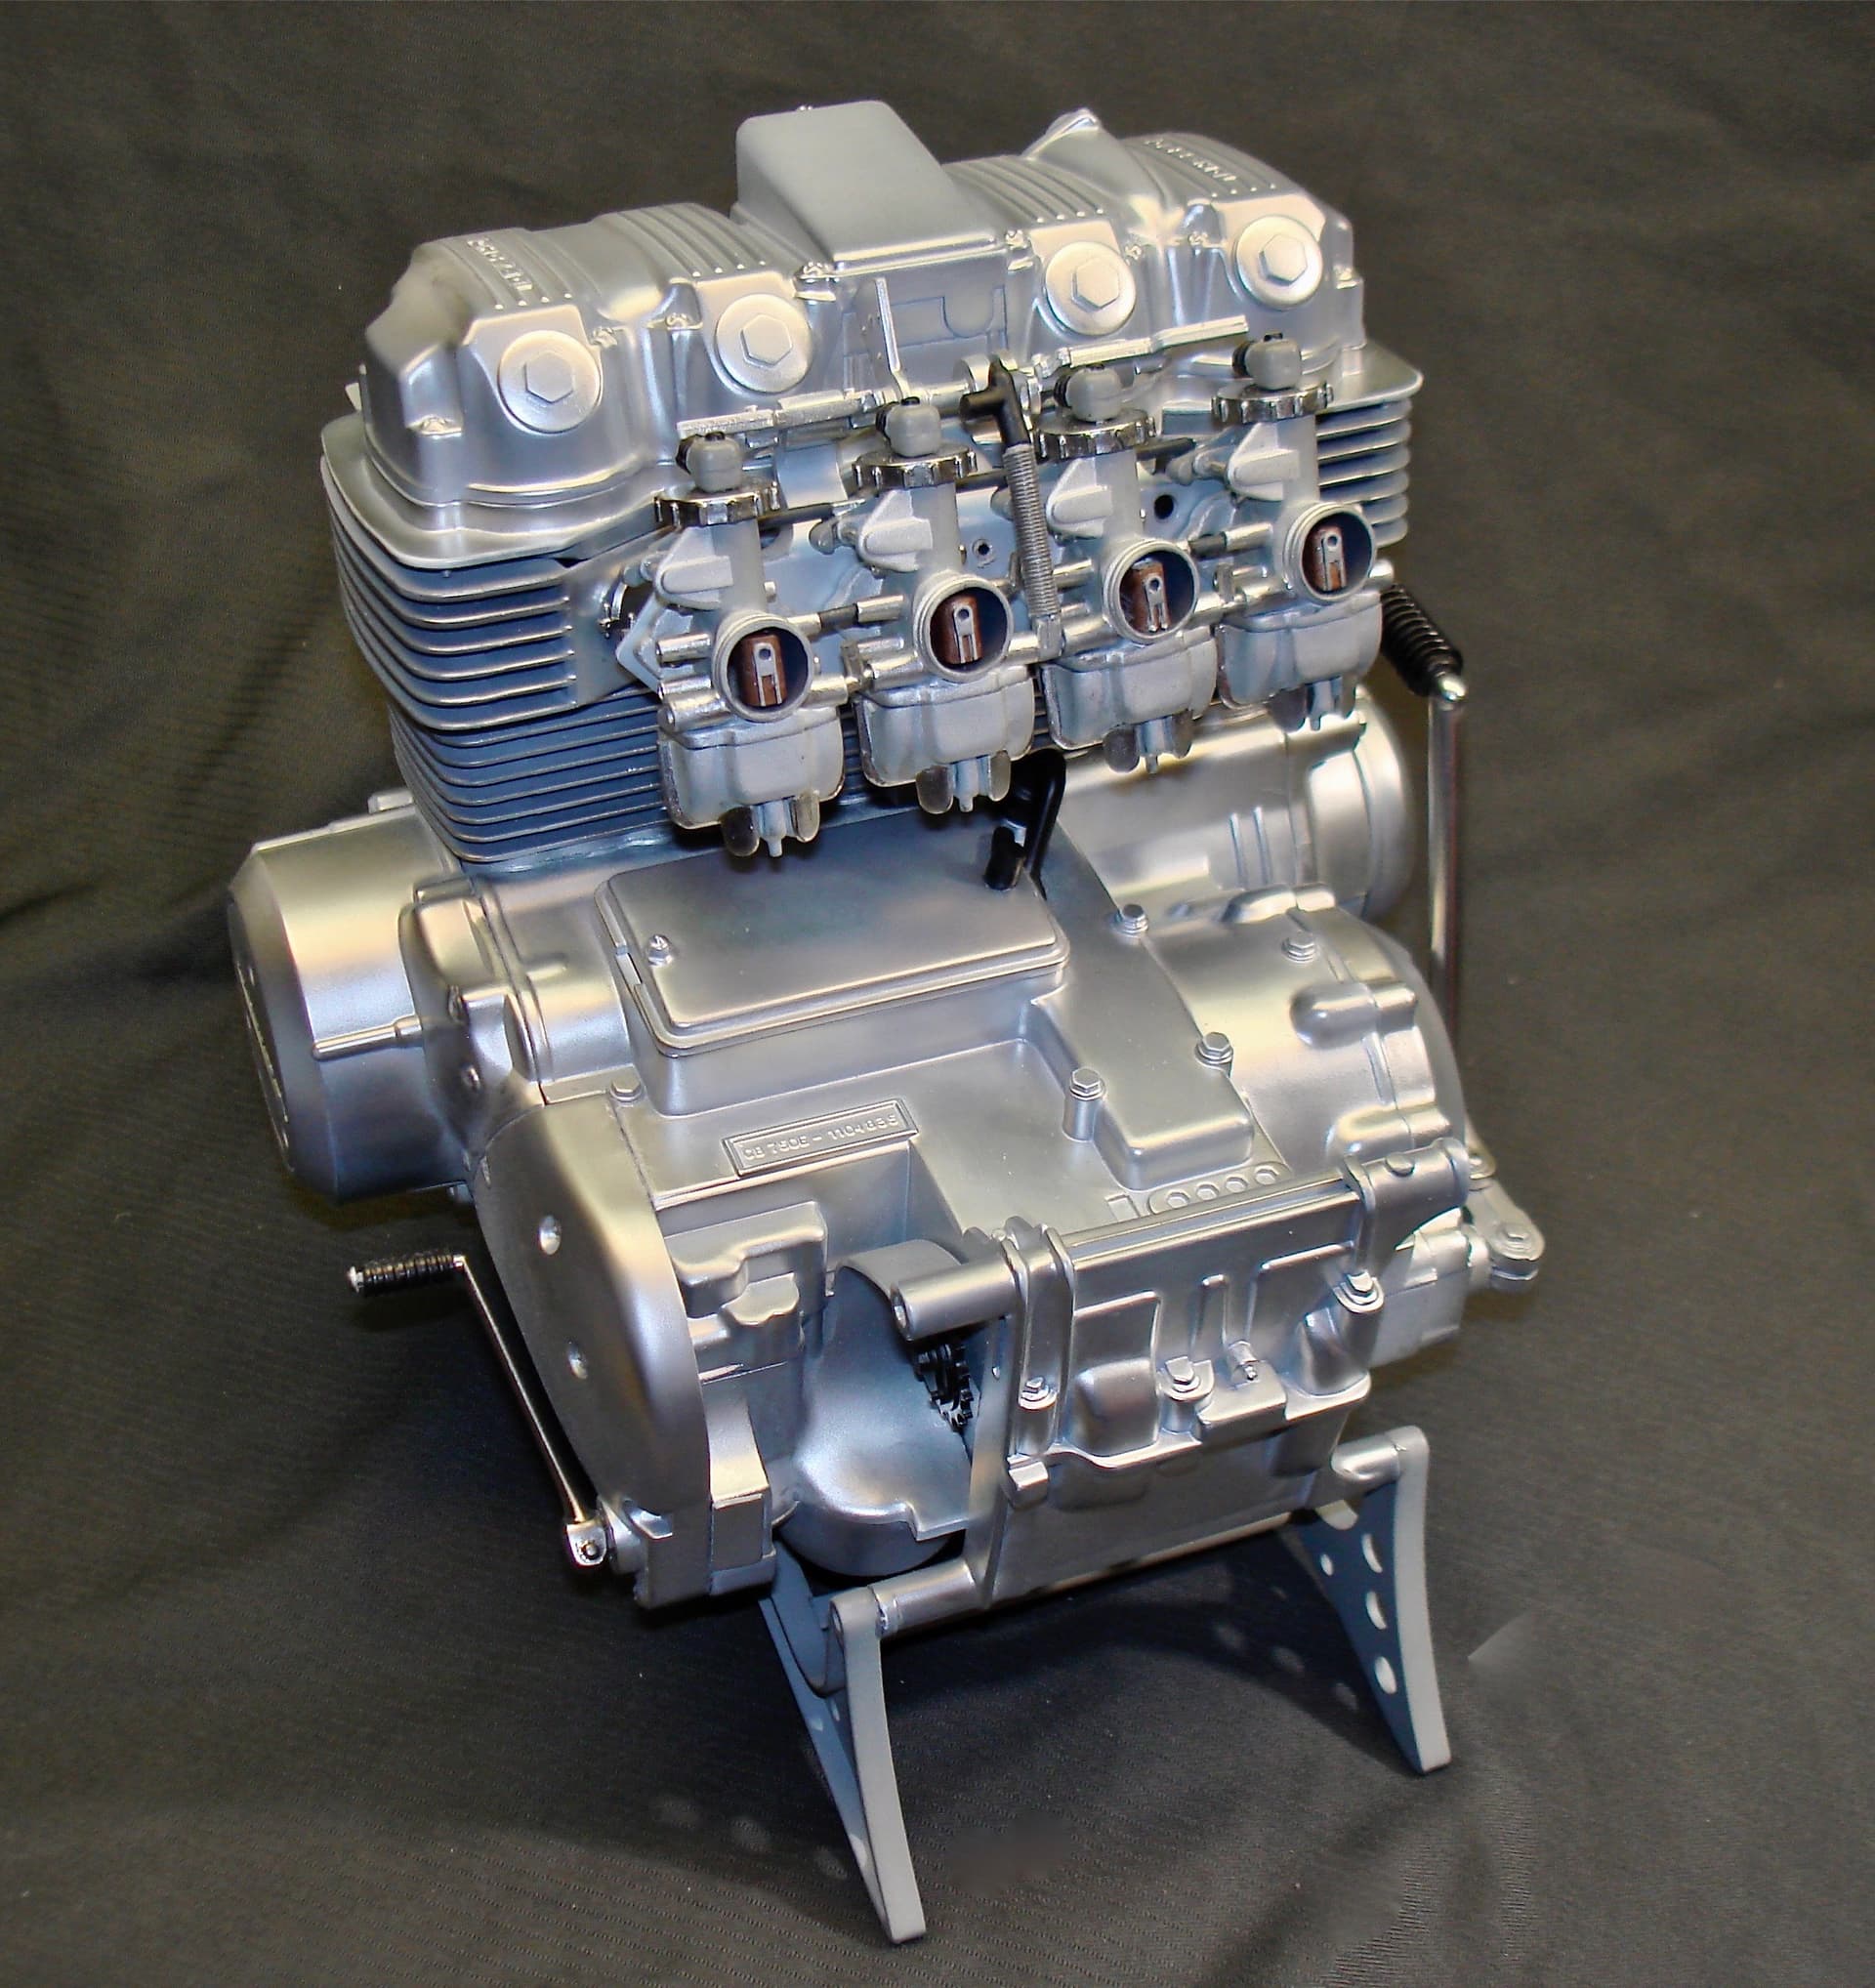 1/3 Minicraft Honda 750 / 4 Display Engine - Motorcycles 